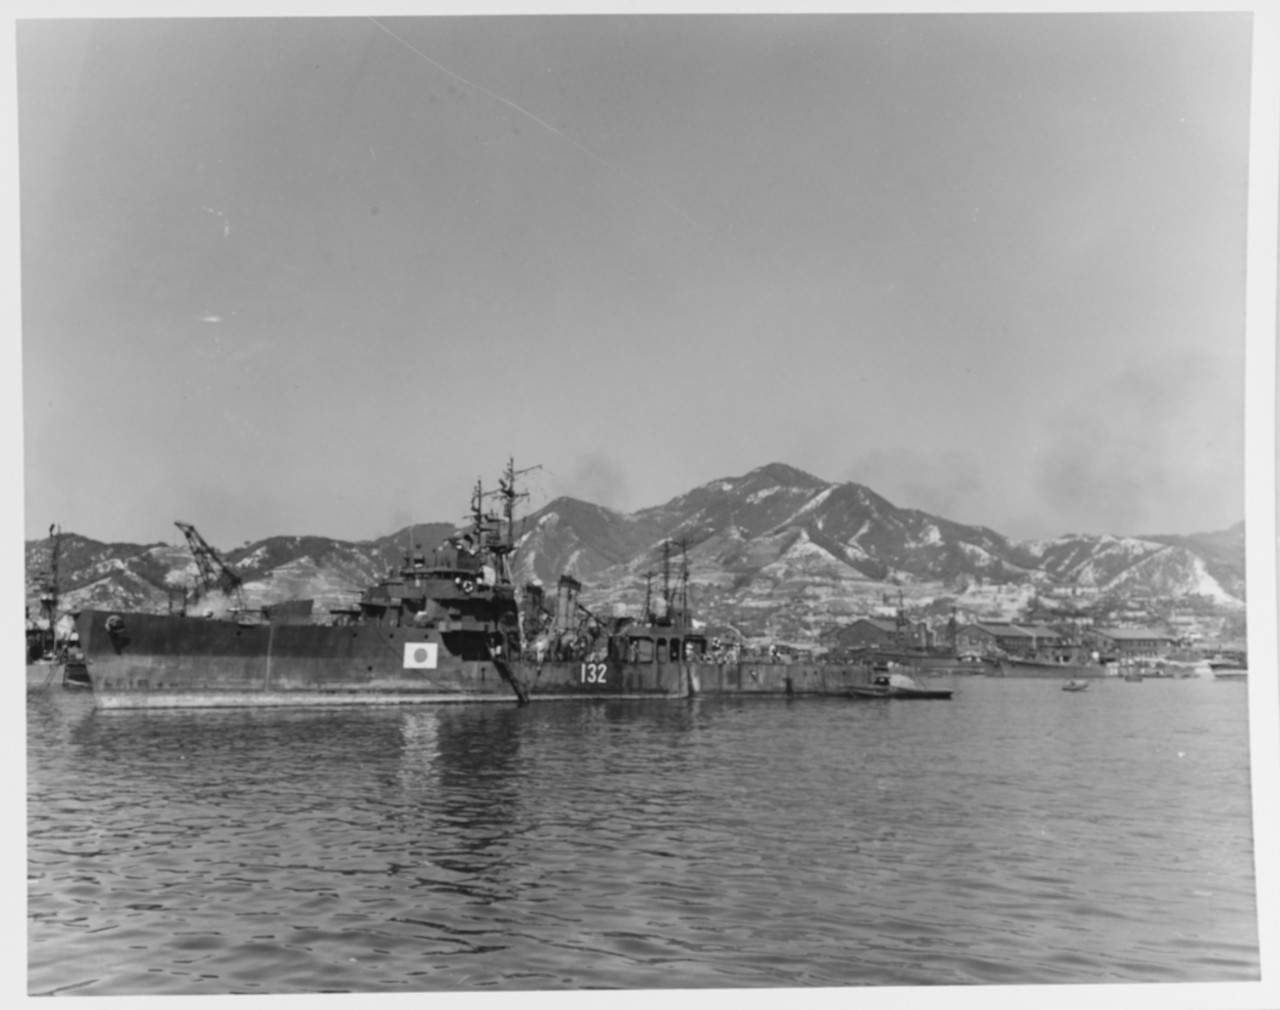 "Kaikoban" 132 (Japanese escort ship, 1944)